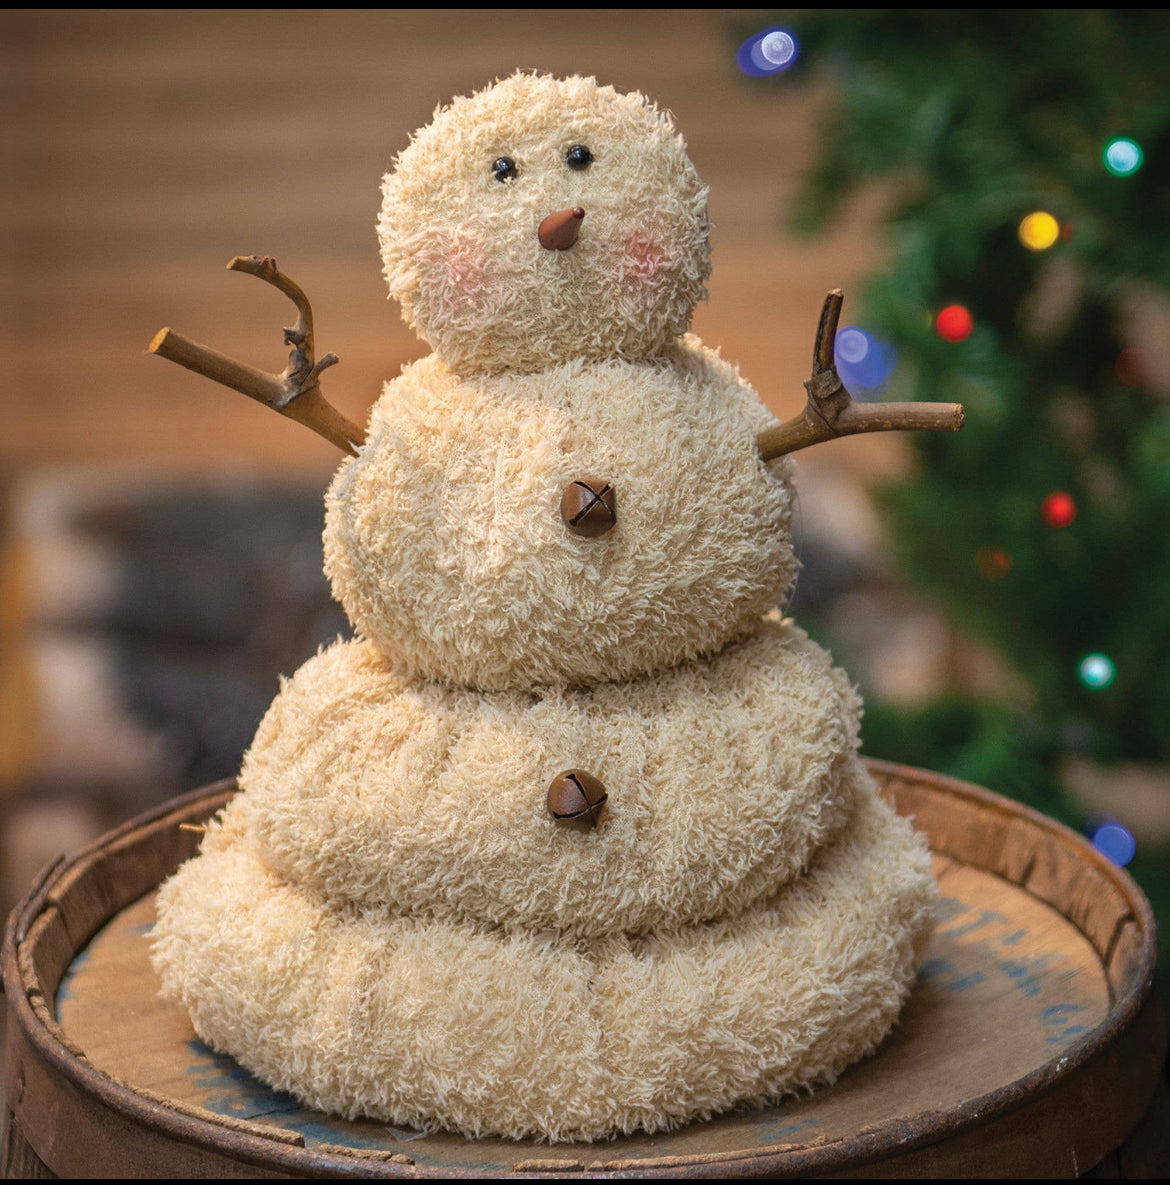 “Happy” The Snowman